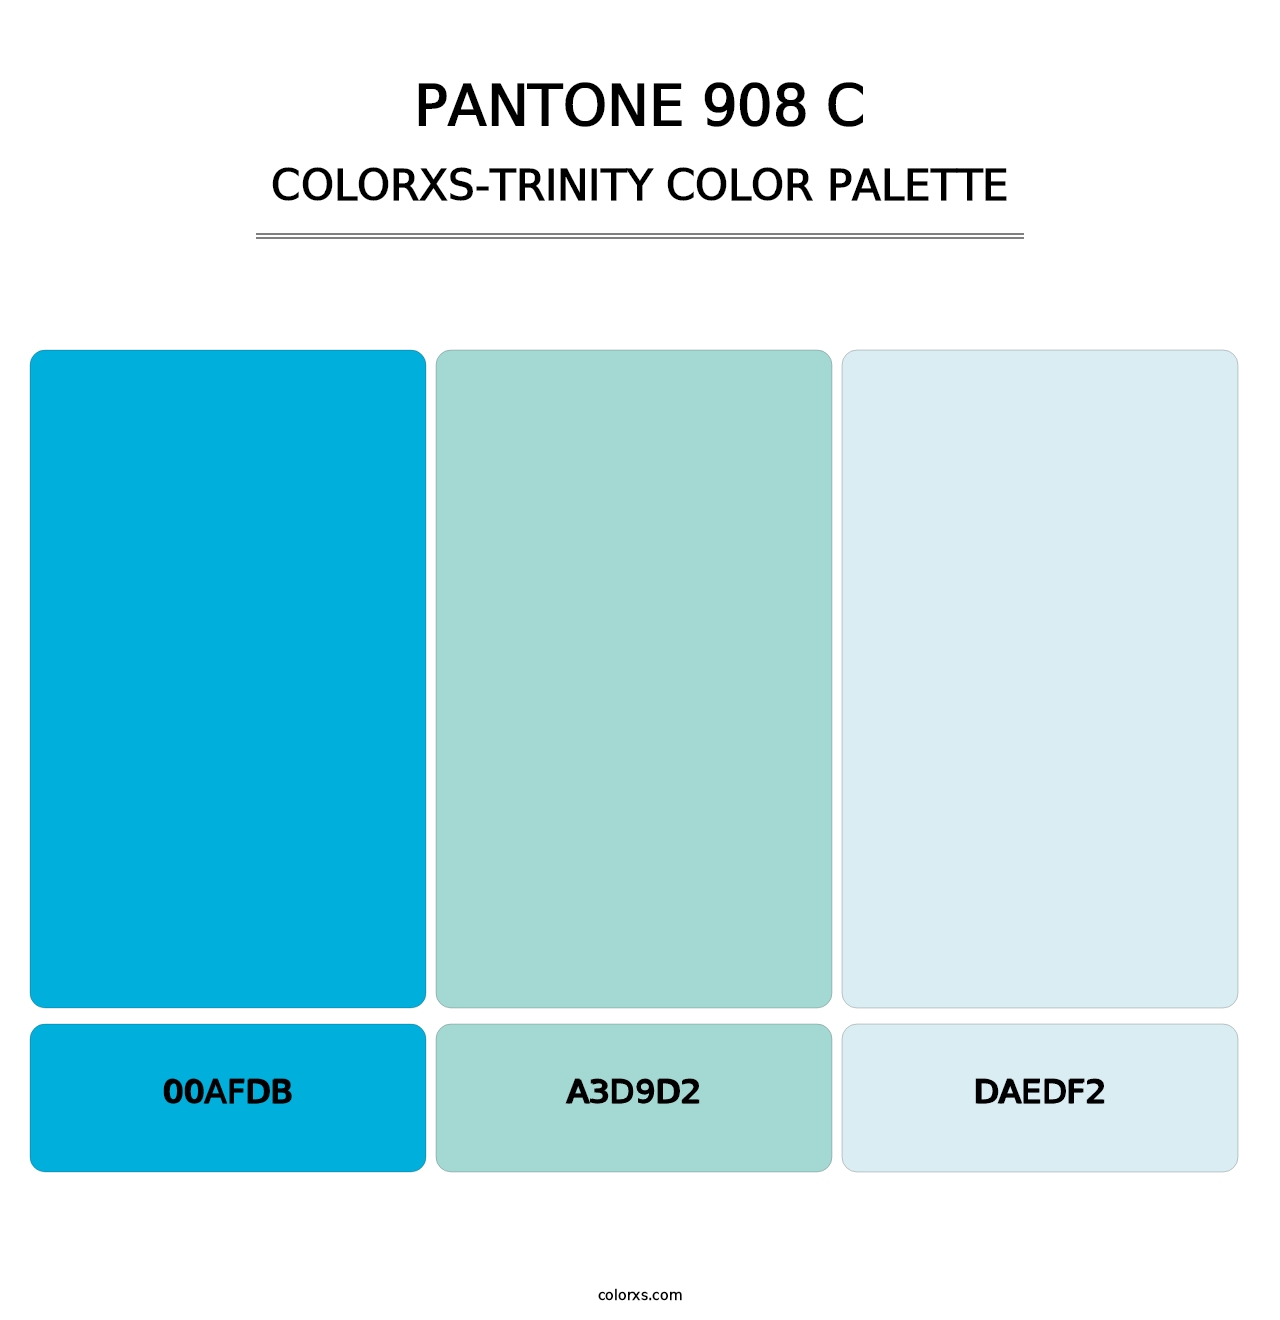 PANTONE 908 C - Colorxs Trinity Palette